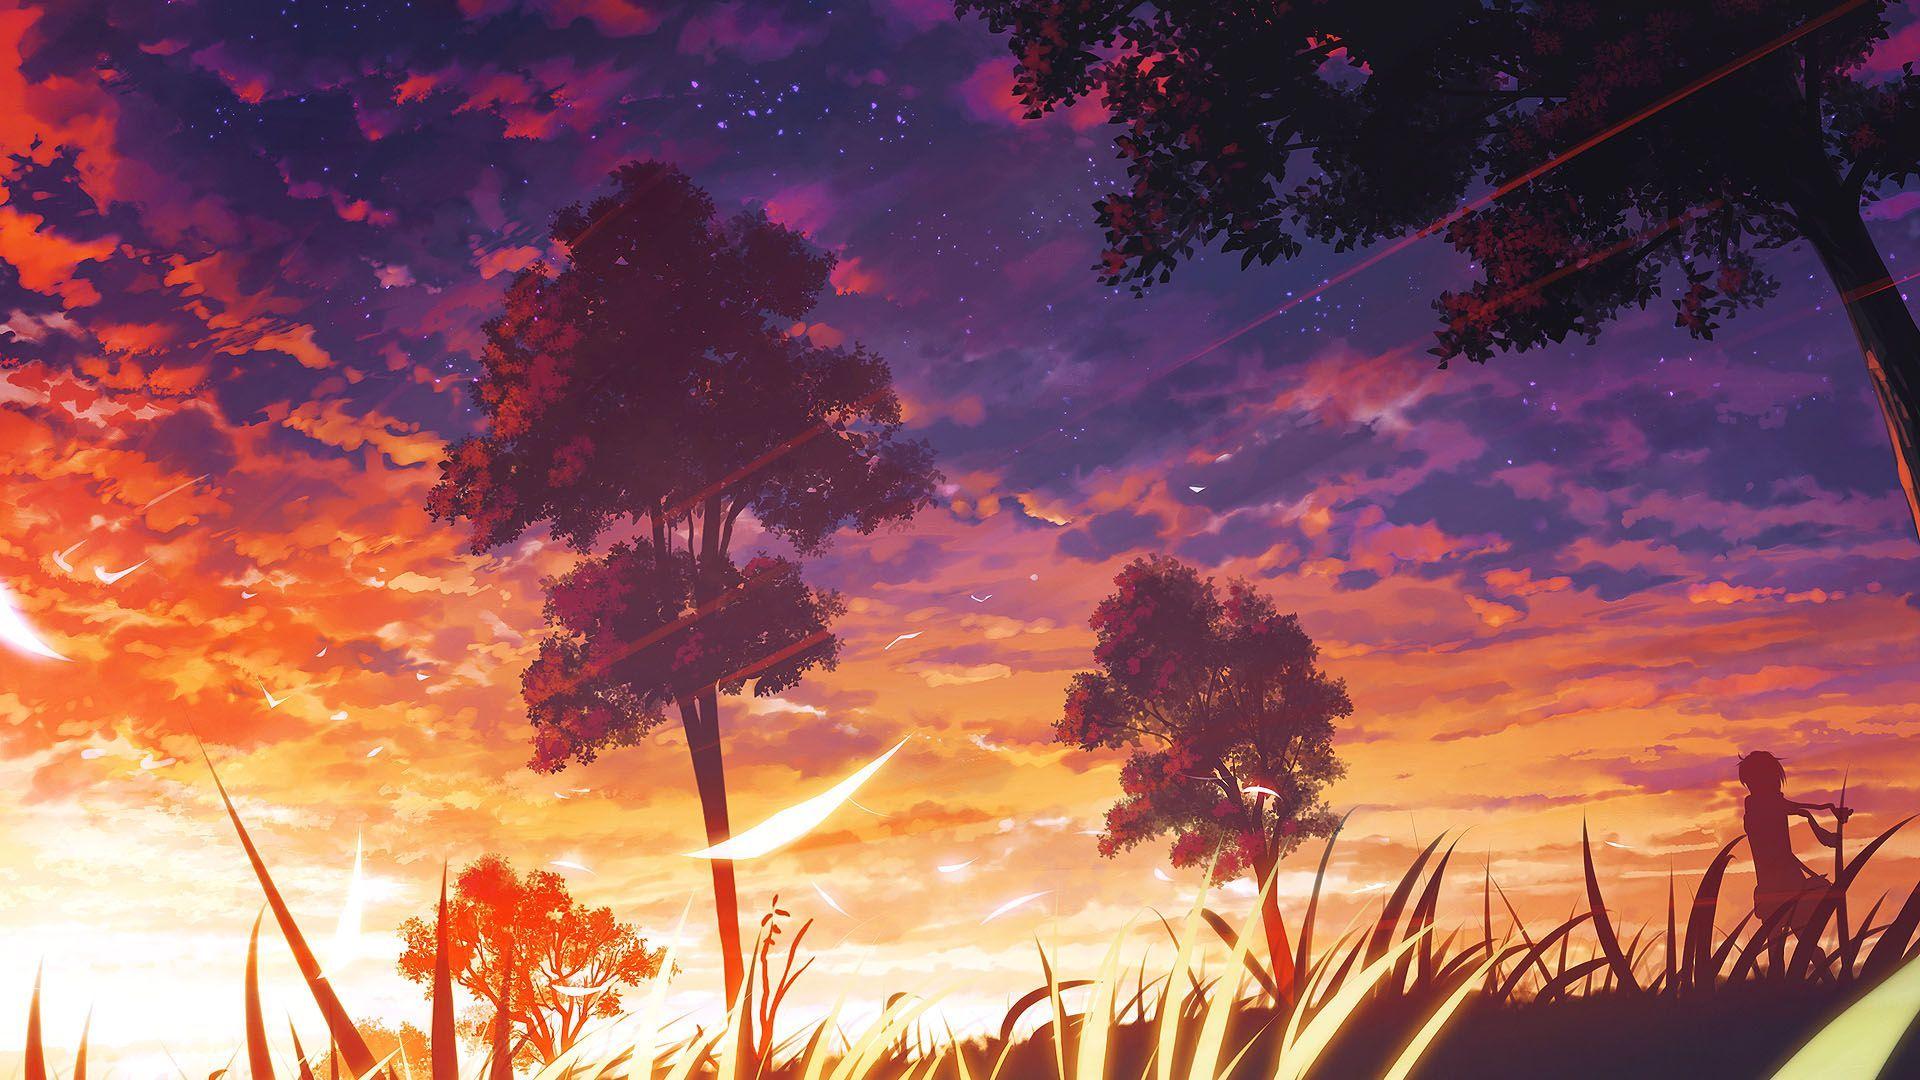 Calming Anime Nature Wallpapers - Top Free Calming Anime Nature